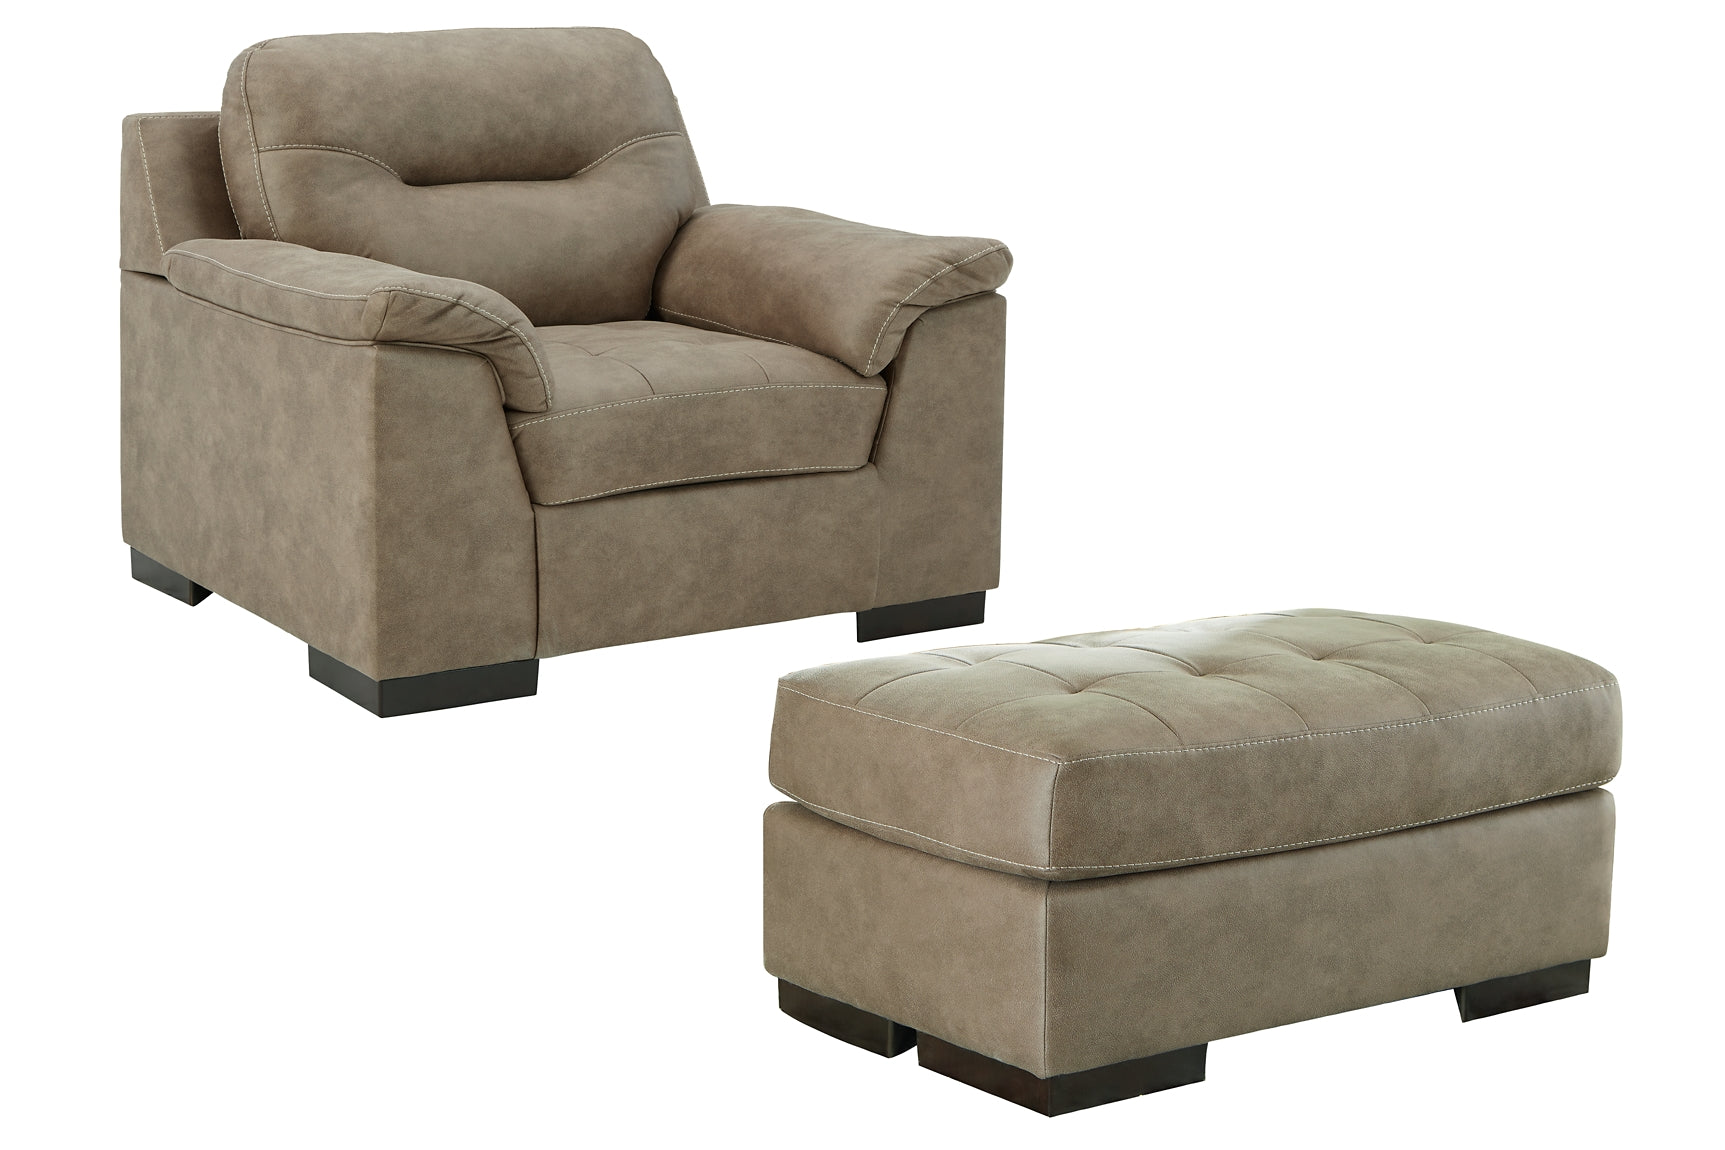 Maderla Chair and Ottoman at Cloud 9 Mattress & Furniture furniture, home furnishing, home decor